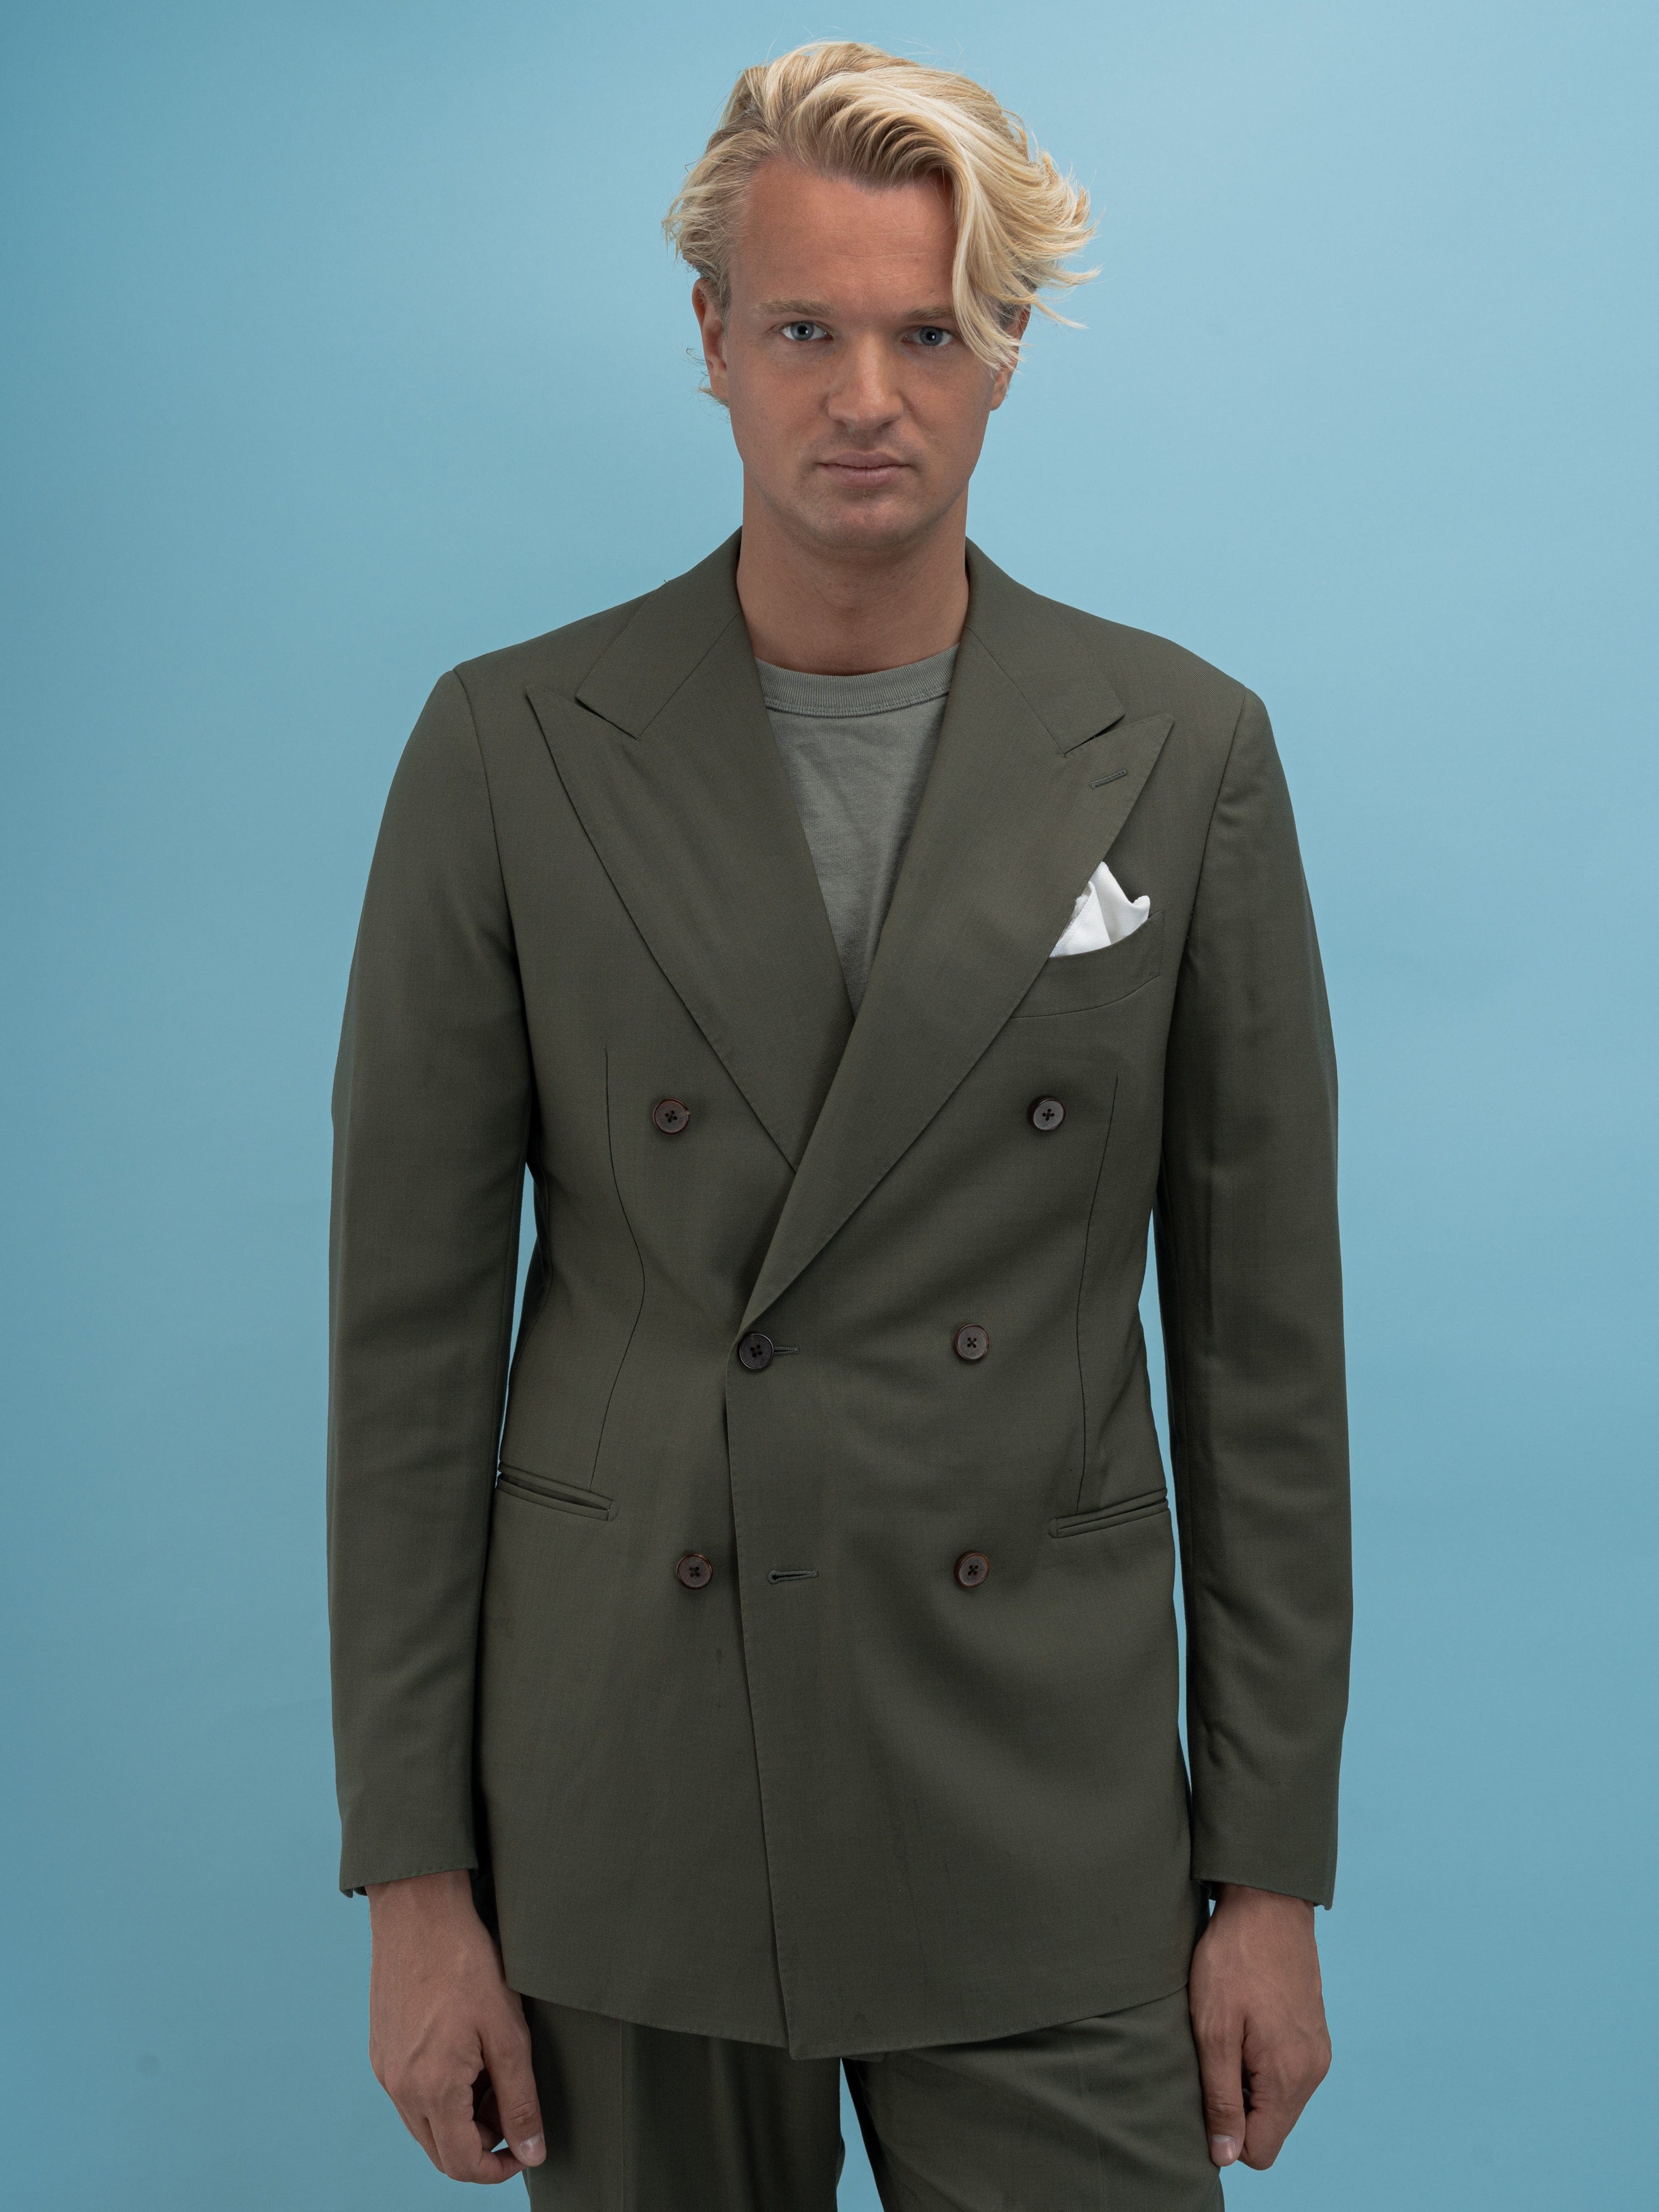 Khaki Green S130 Wool Suit - Grand Le Mar